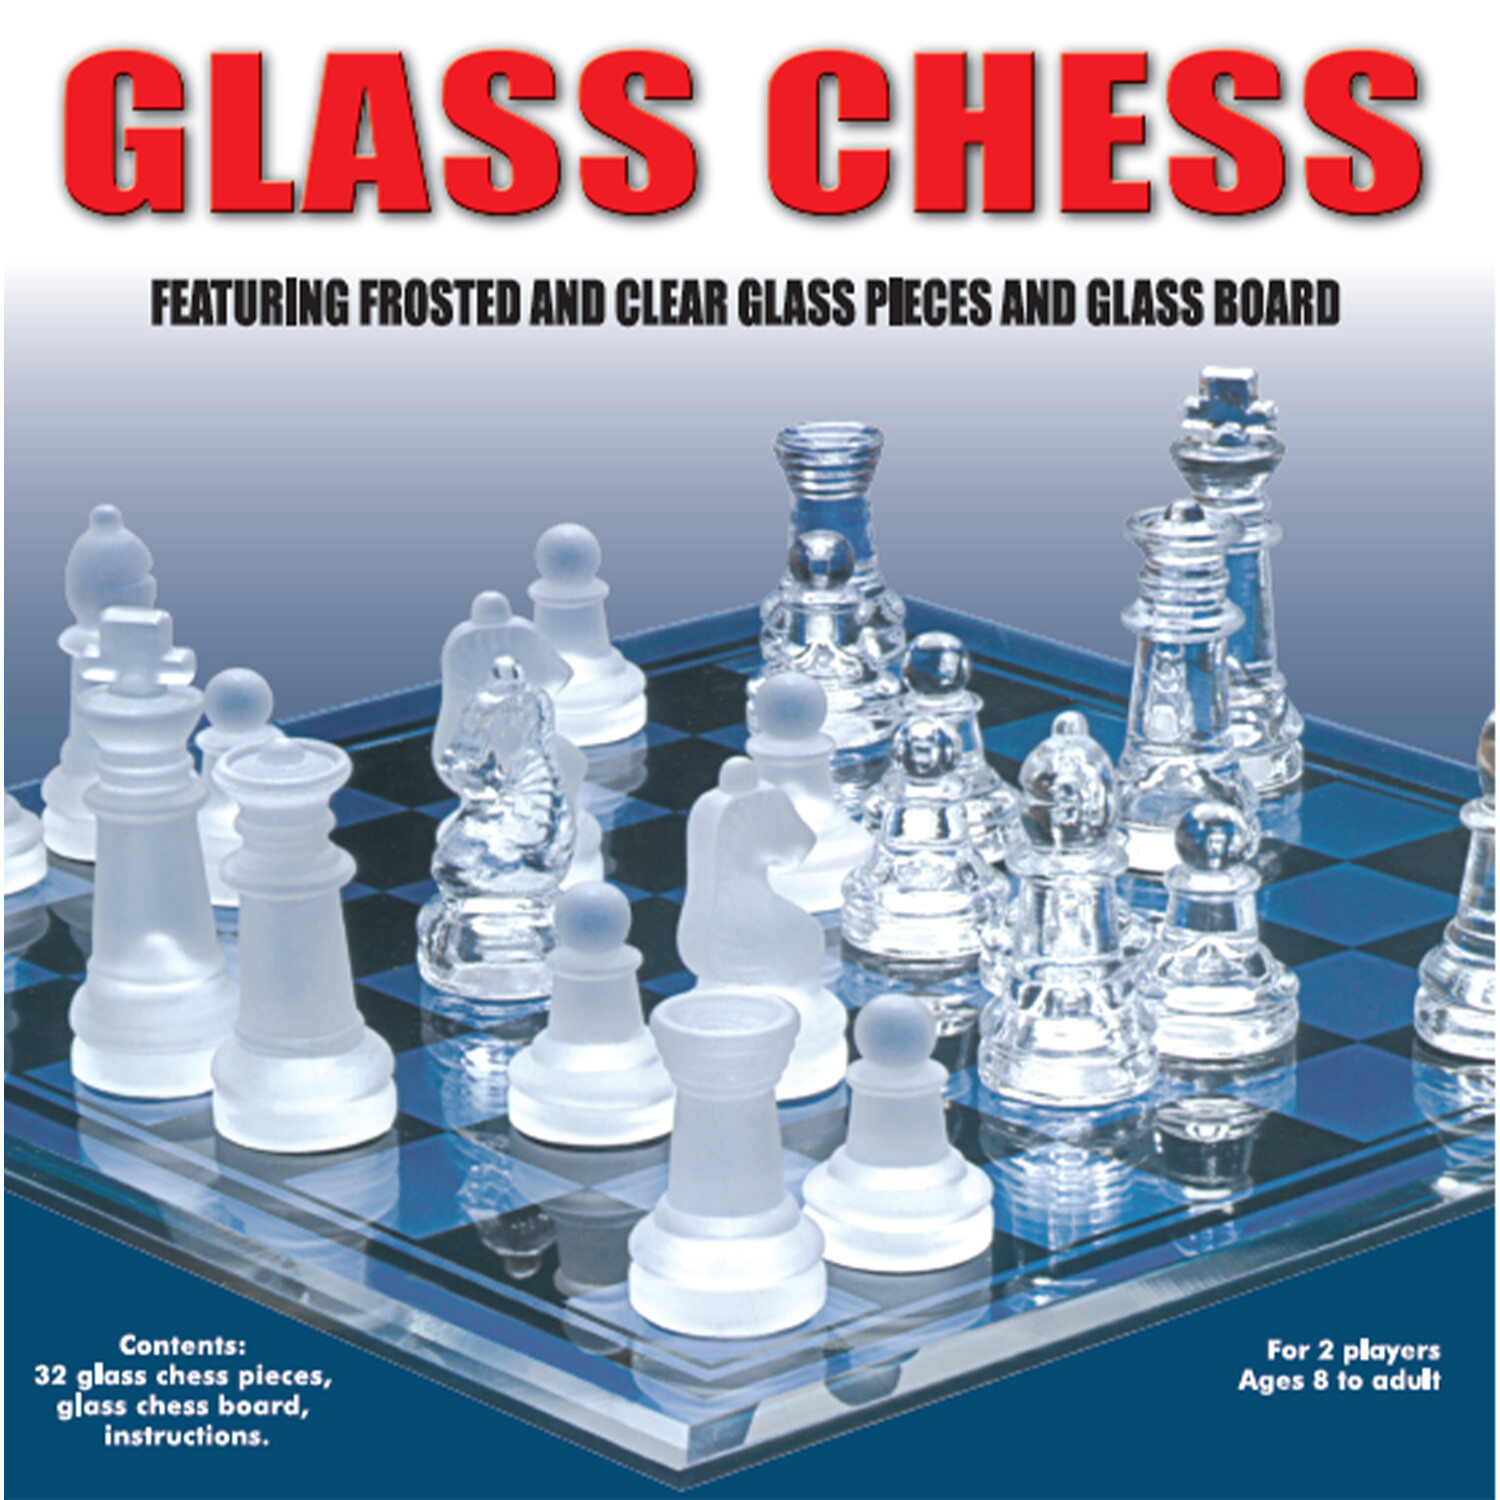 Glass Chess Image